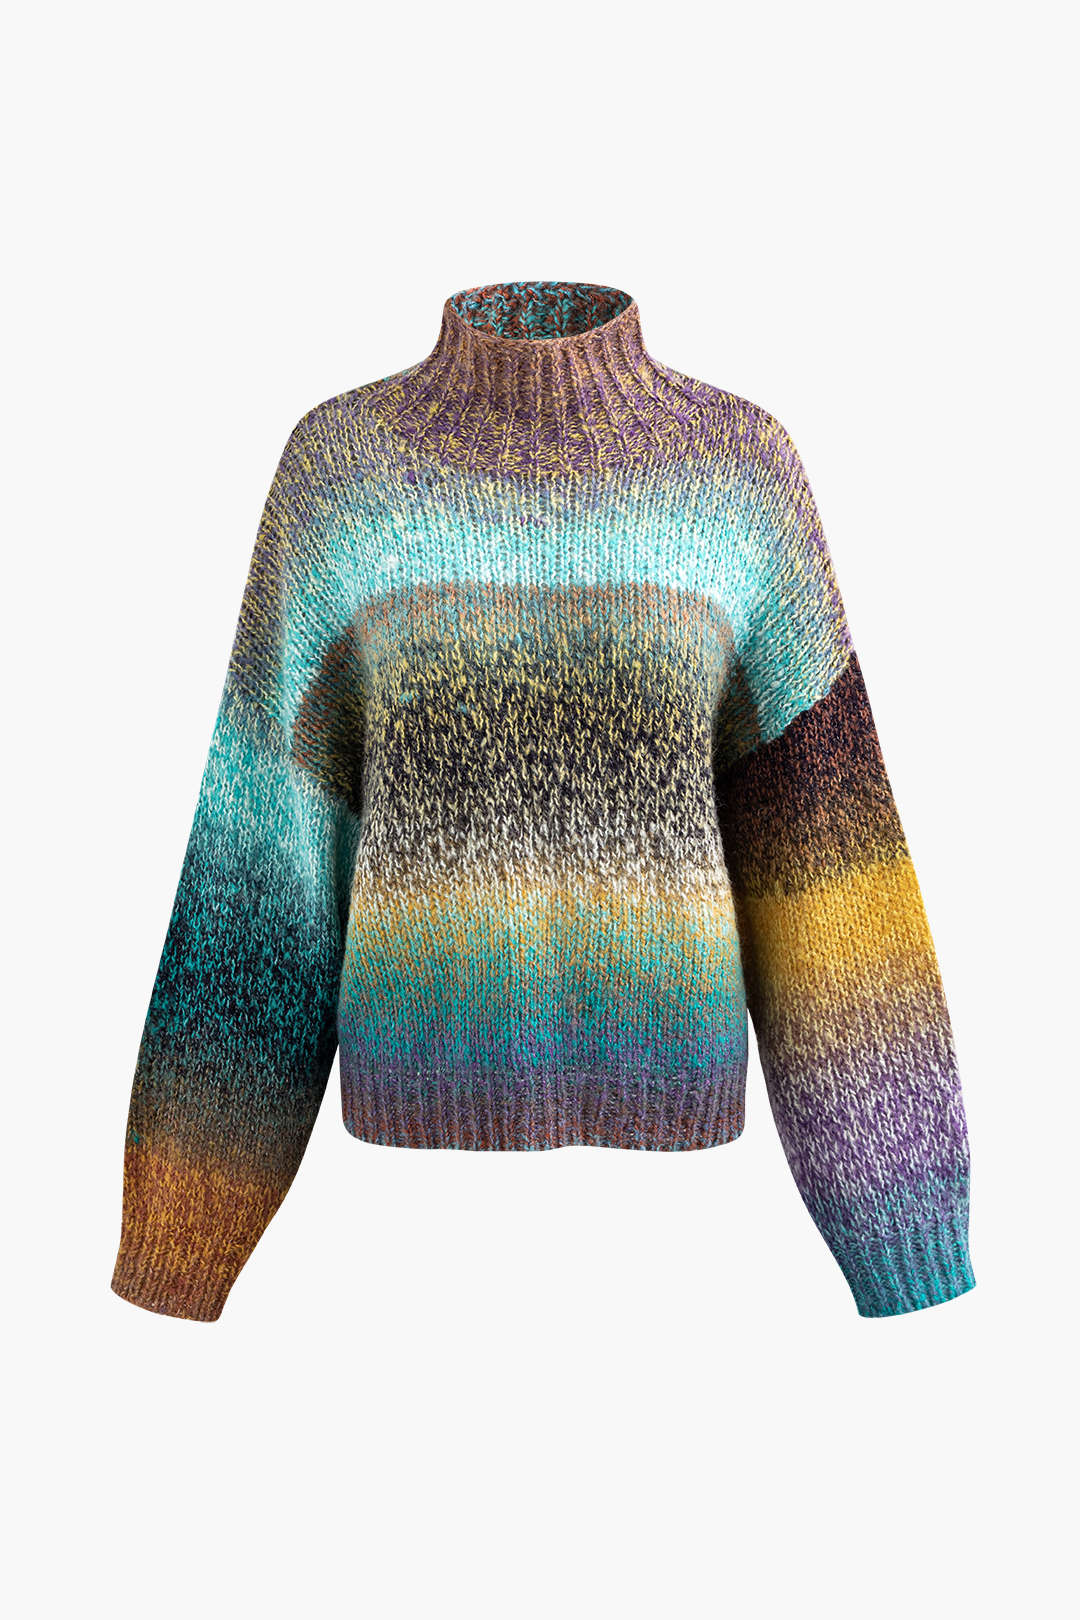 Ombre Turtleneck Drop Shoulder Long Sleeve Sweater